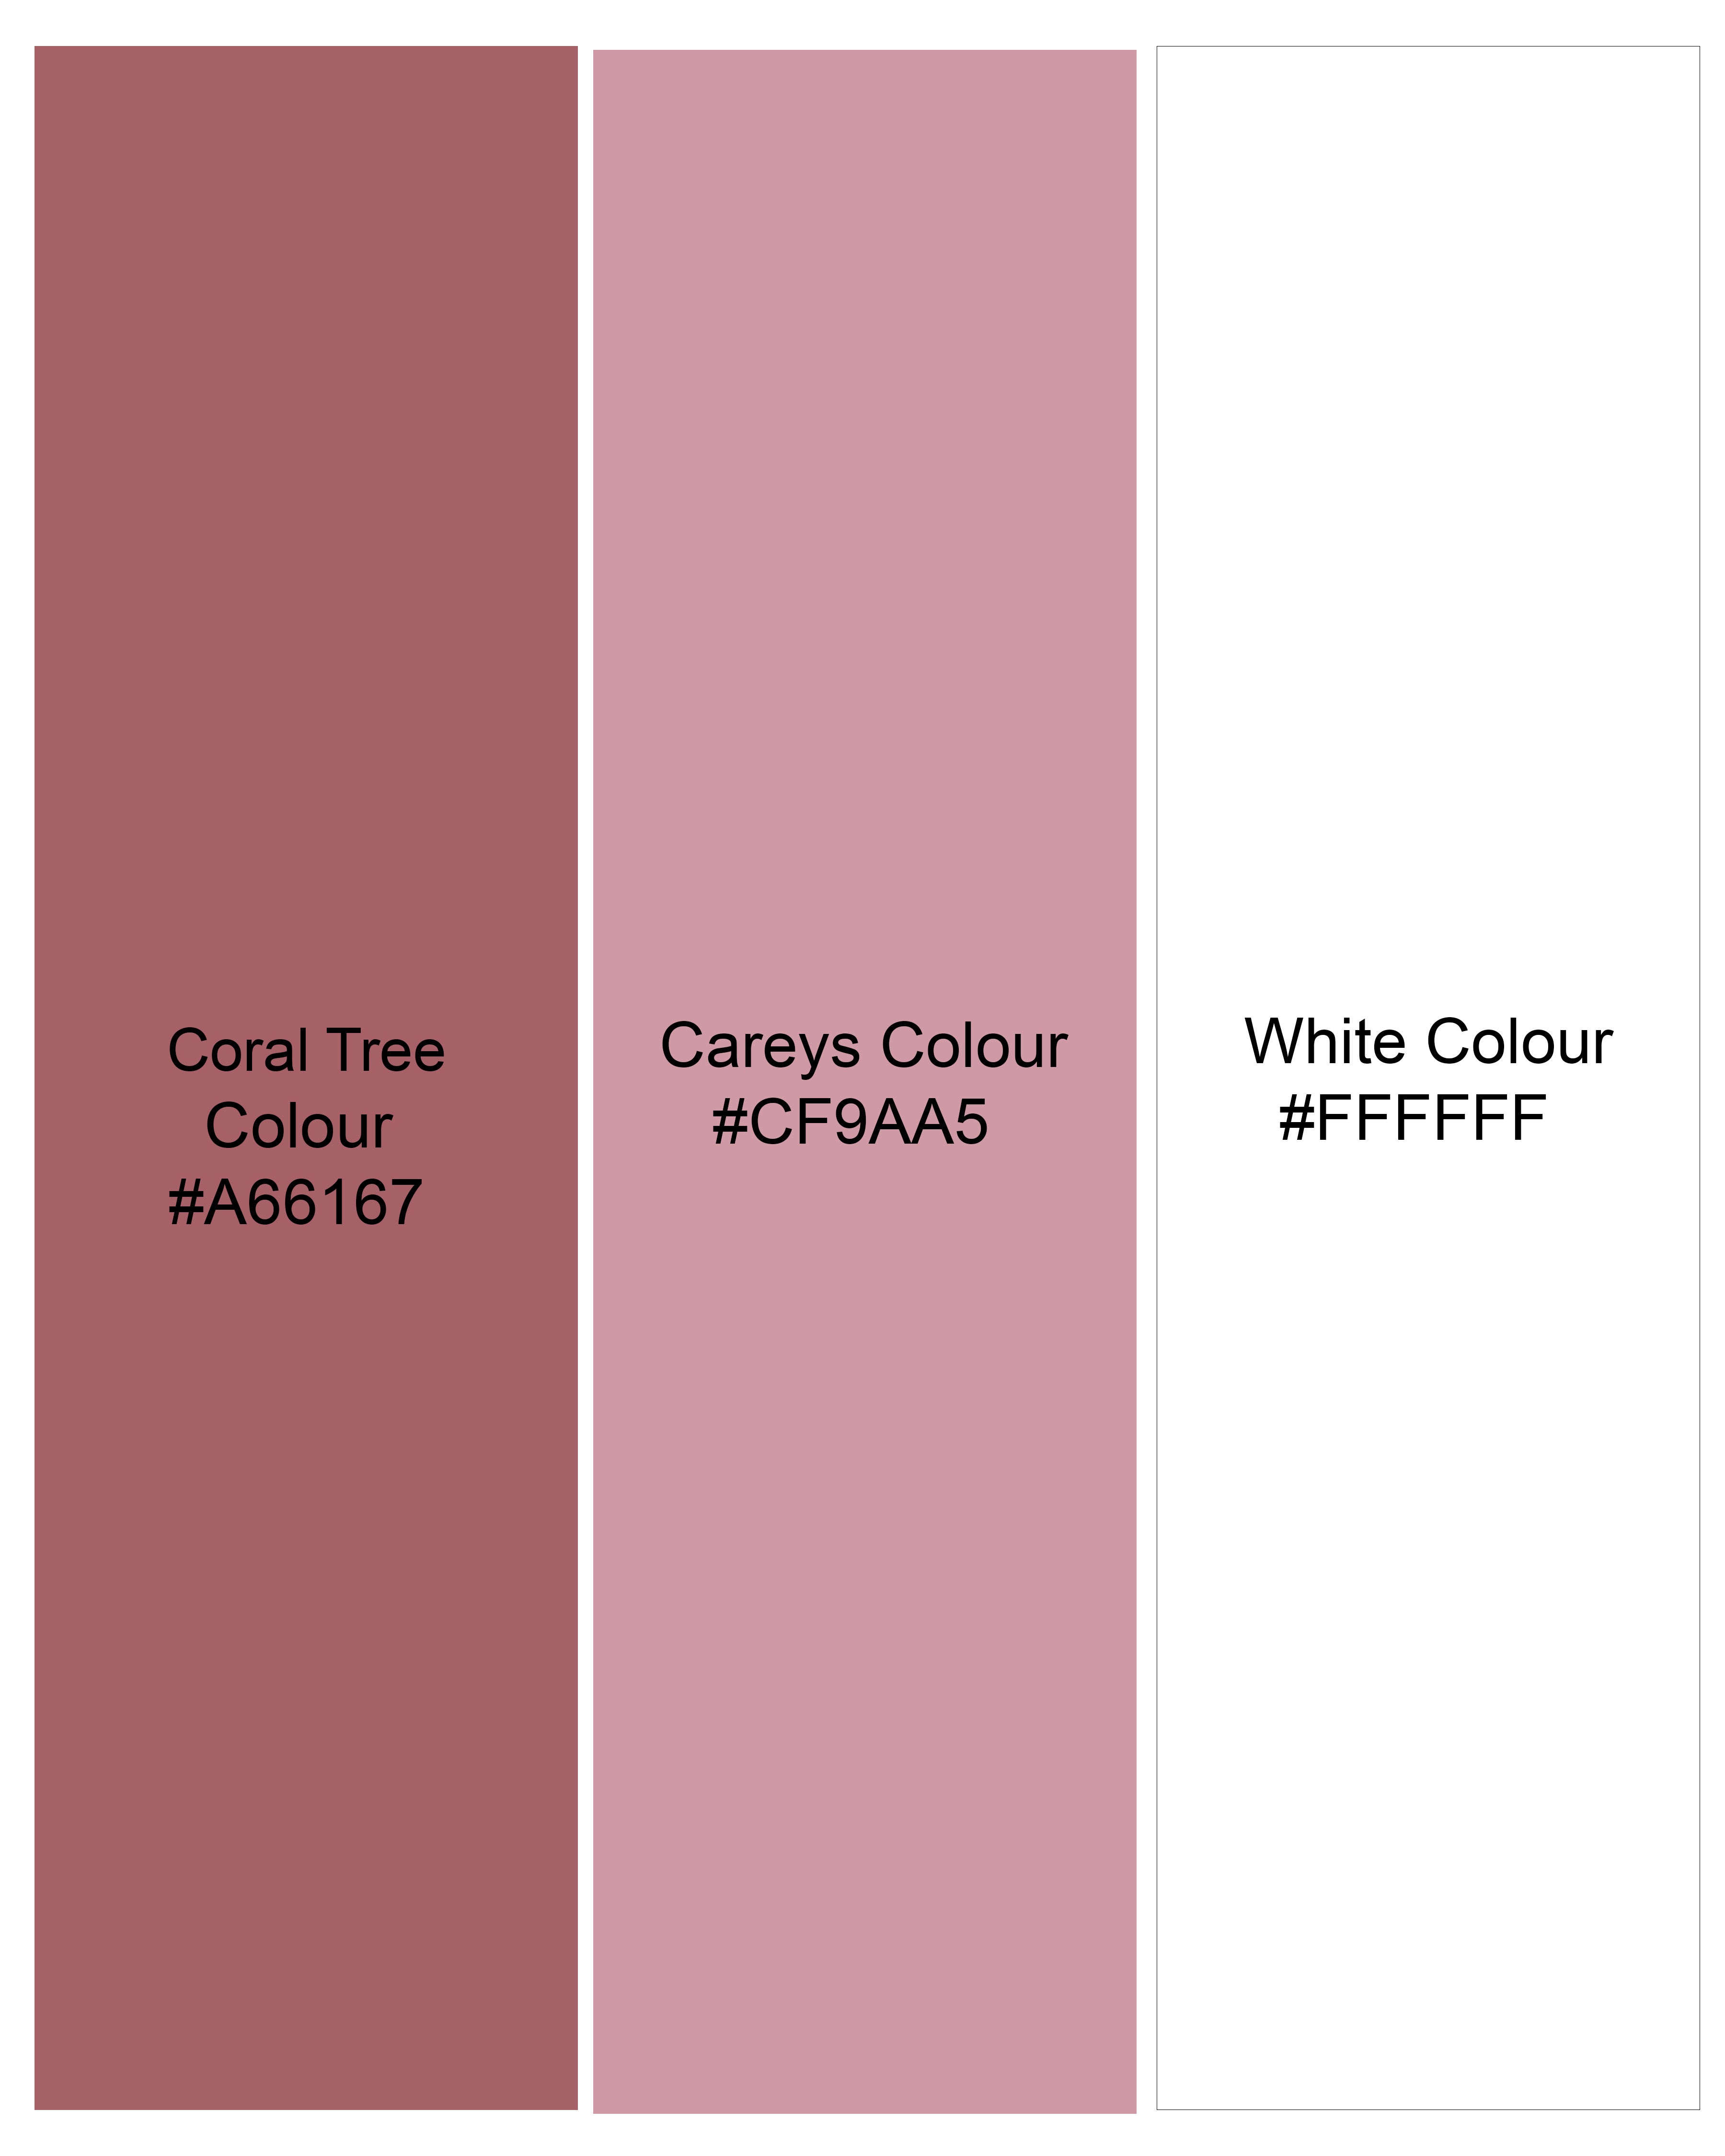 Coral Tree with Careys Pink Spider Embroidered Super Soft Premium Cotton Shirt 6987-P134-E016-38, 6987-P134-E016-H-38, 6987-P134-E016-39, 6987-P134-E016-H-39, 6987-P134-E016-40, 6987-P134-E016-H-40, 6987-P134-E016-42, 6987-P134-E016-H-42, 6987-P134-E016-44, 6987-P134-E016-H-44, 6987-P134-E016-46, 6987-P134-E016-H-46, 6987-P134-E016-48, 6987-P134-E016-H-48, 6987-P134-E016-50, 6987-P134-E016-H-50, 6987-P134-E016-52, 6987-P134-E016-H-52